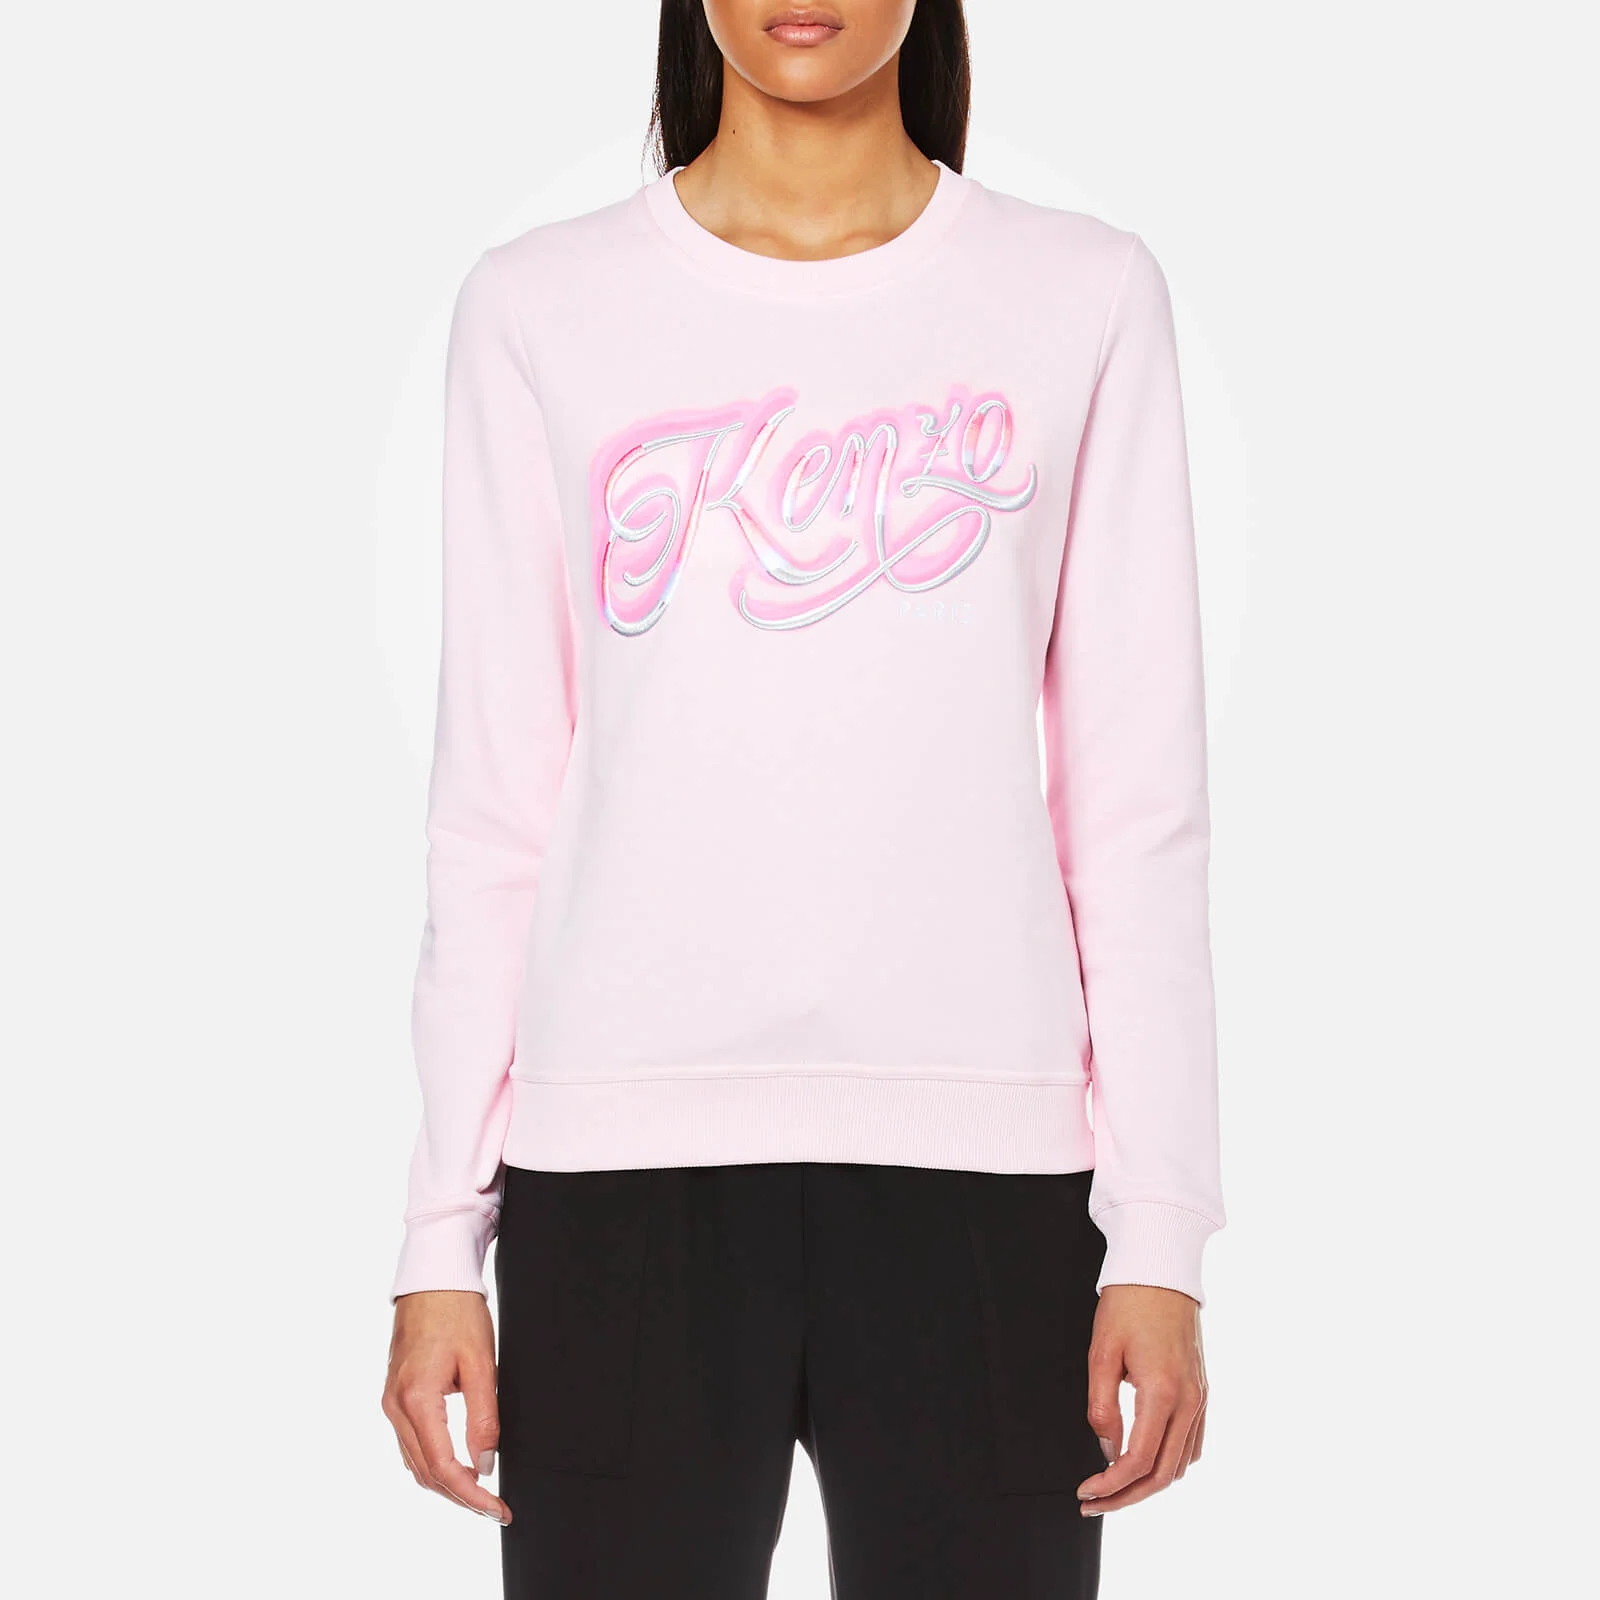 KENZO Women's Light Cotton Molleton Logo Sweatshirt - Faded Pink Image 1